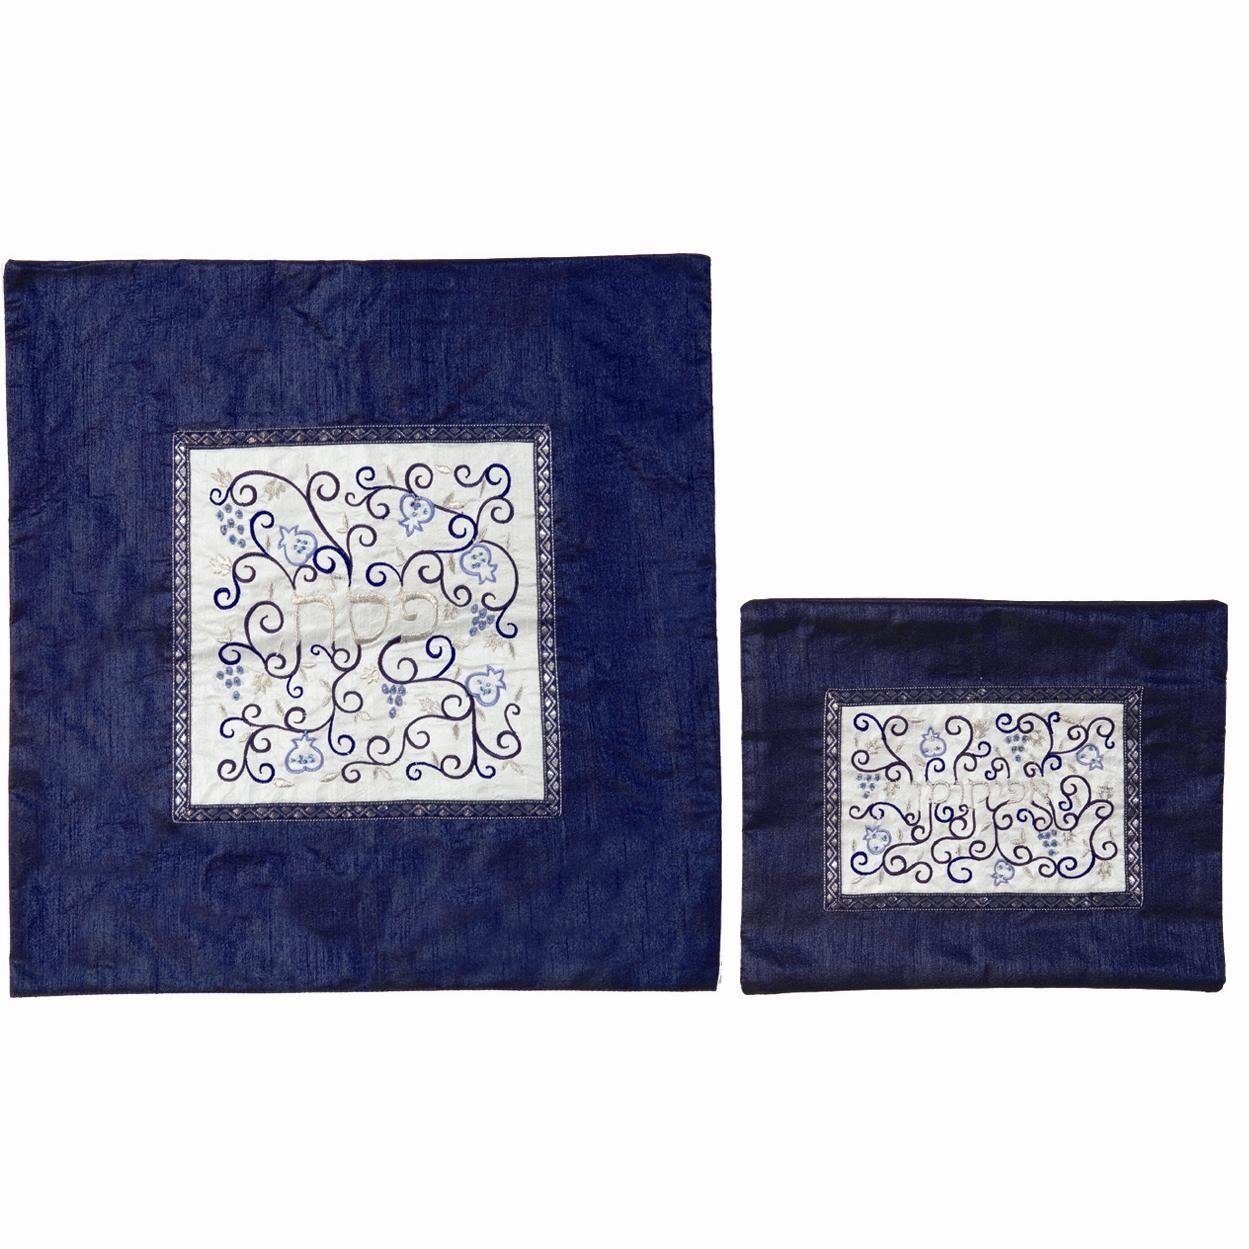 Pomegranates: Yair Emanuel Machine Embroidered Matzah Cover and Afikoman Bag (Blue and White) - 1